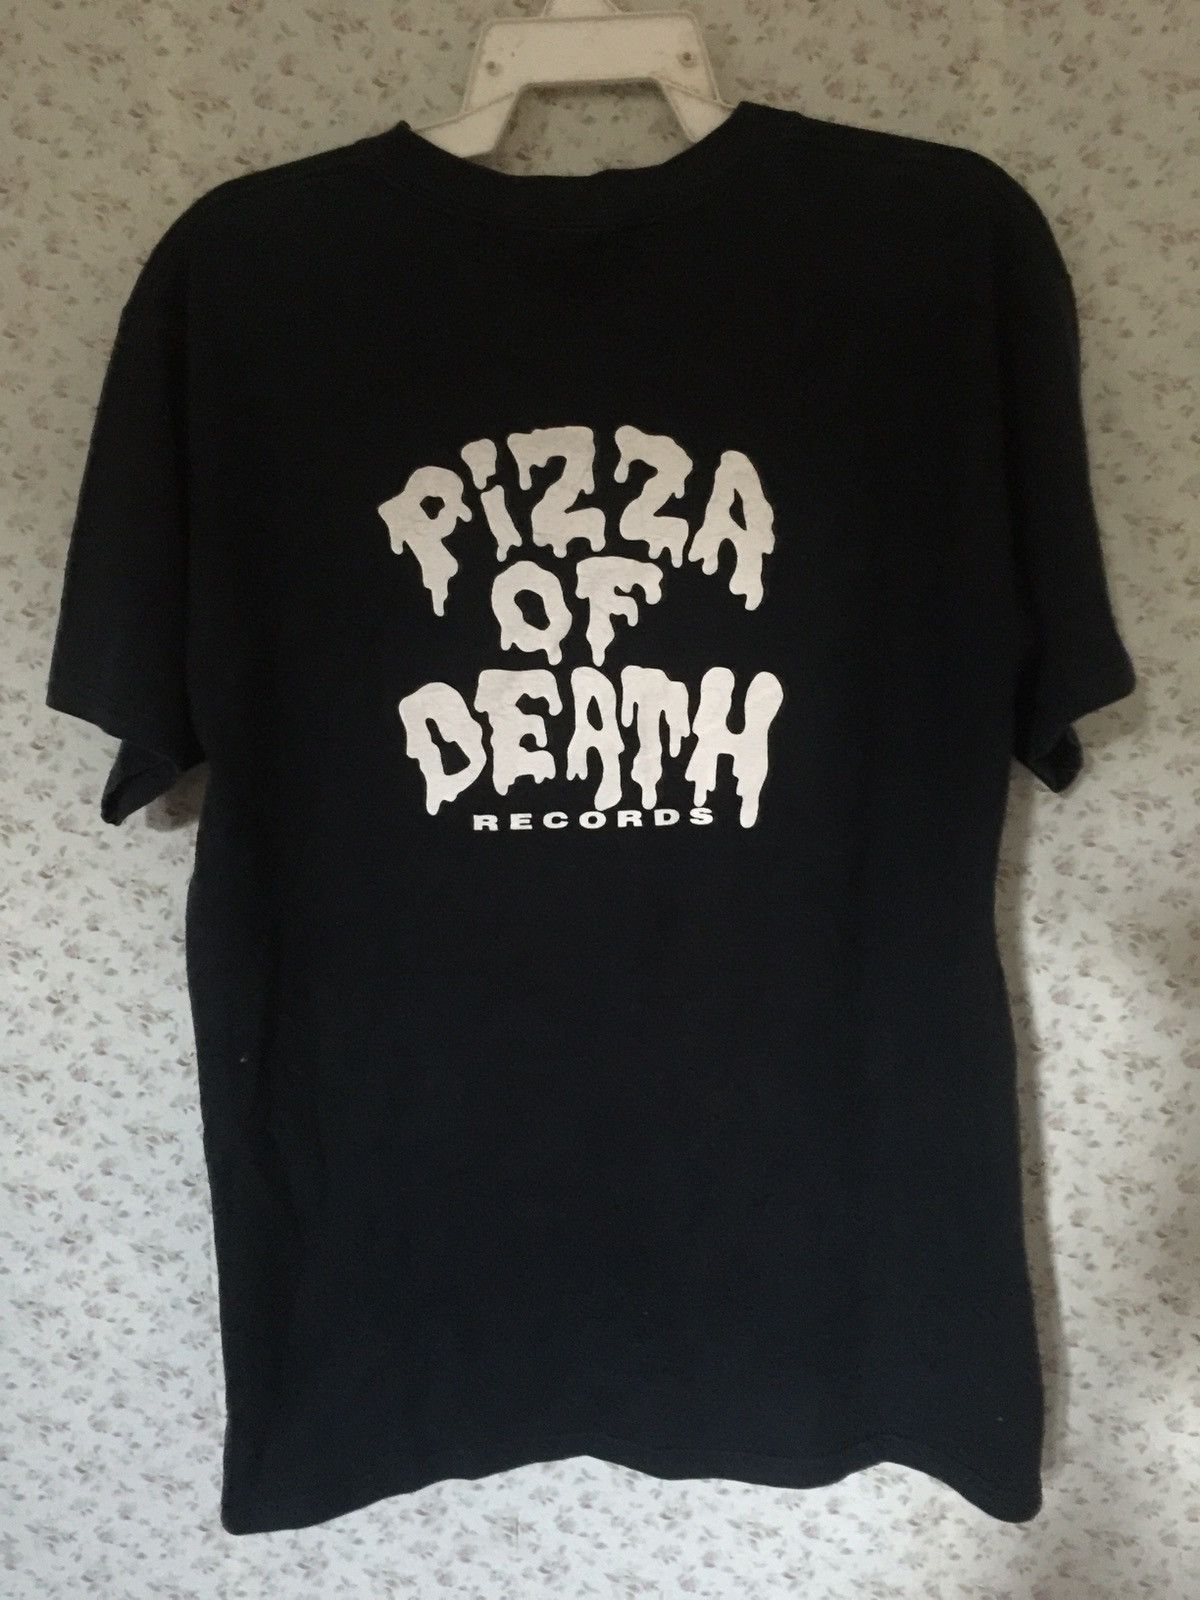 Pizza Of Death Record | Grailed